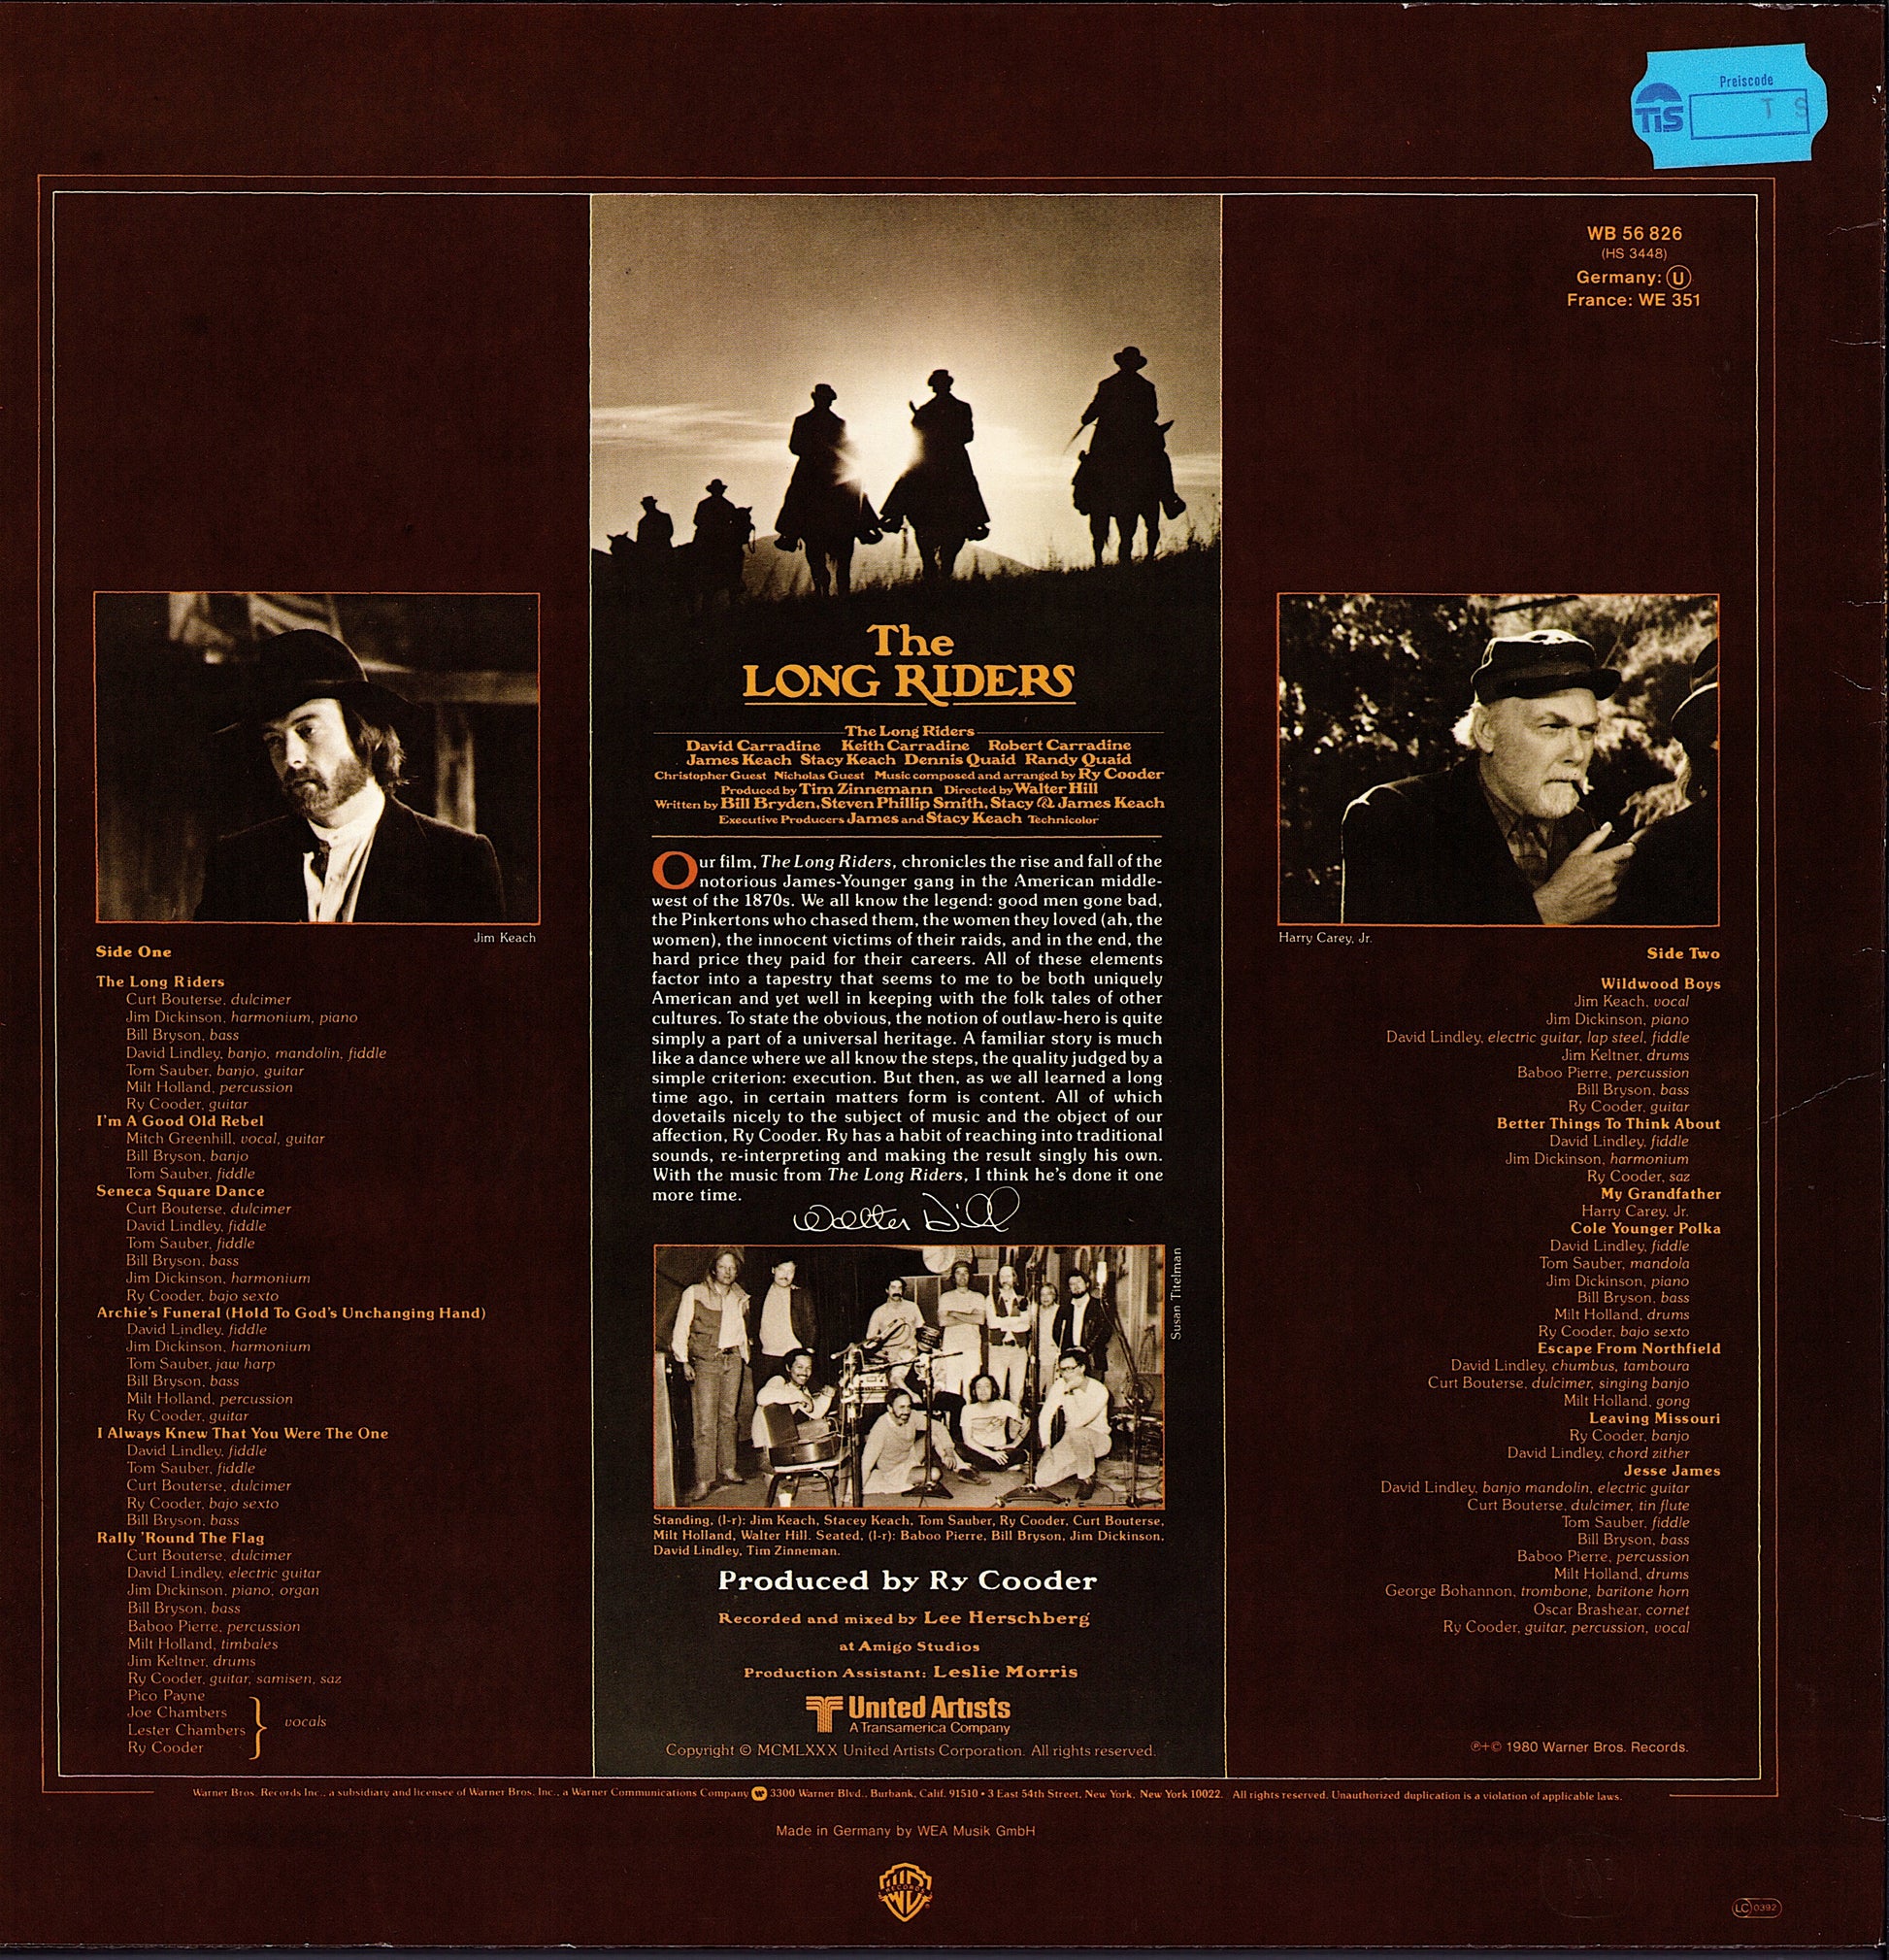 Ry Cooder - The Long Riders Original Sound Track Vinyl LP